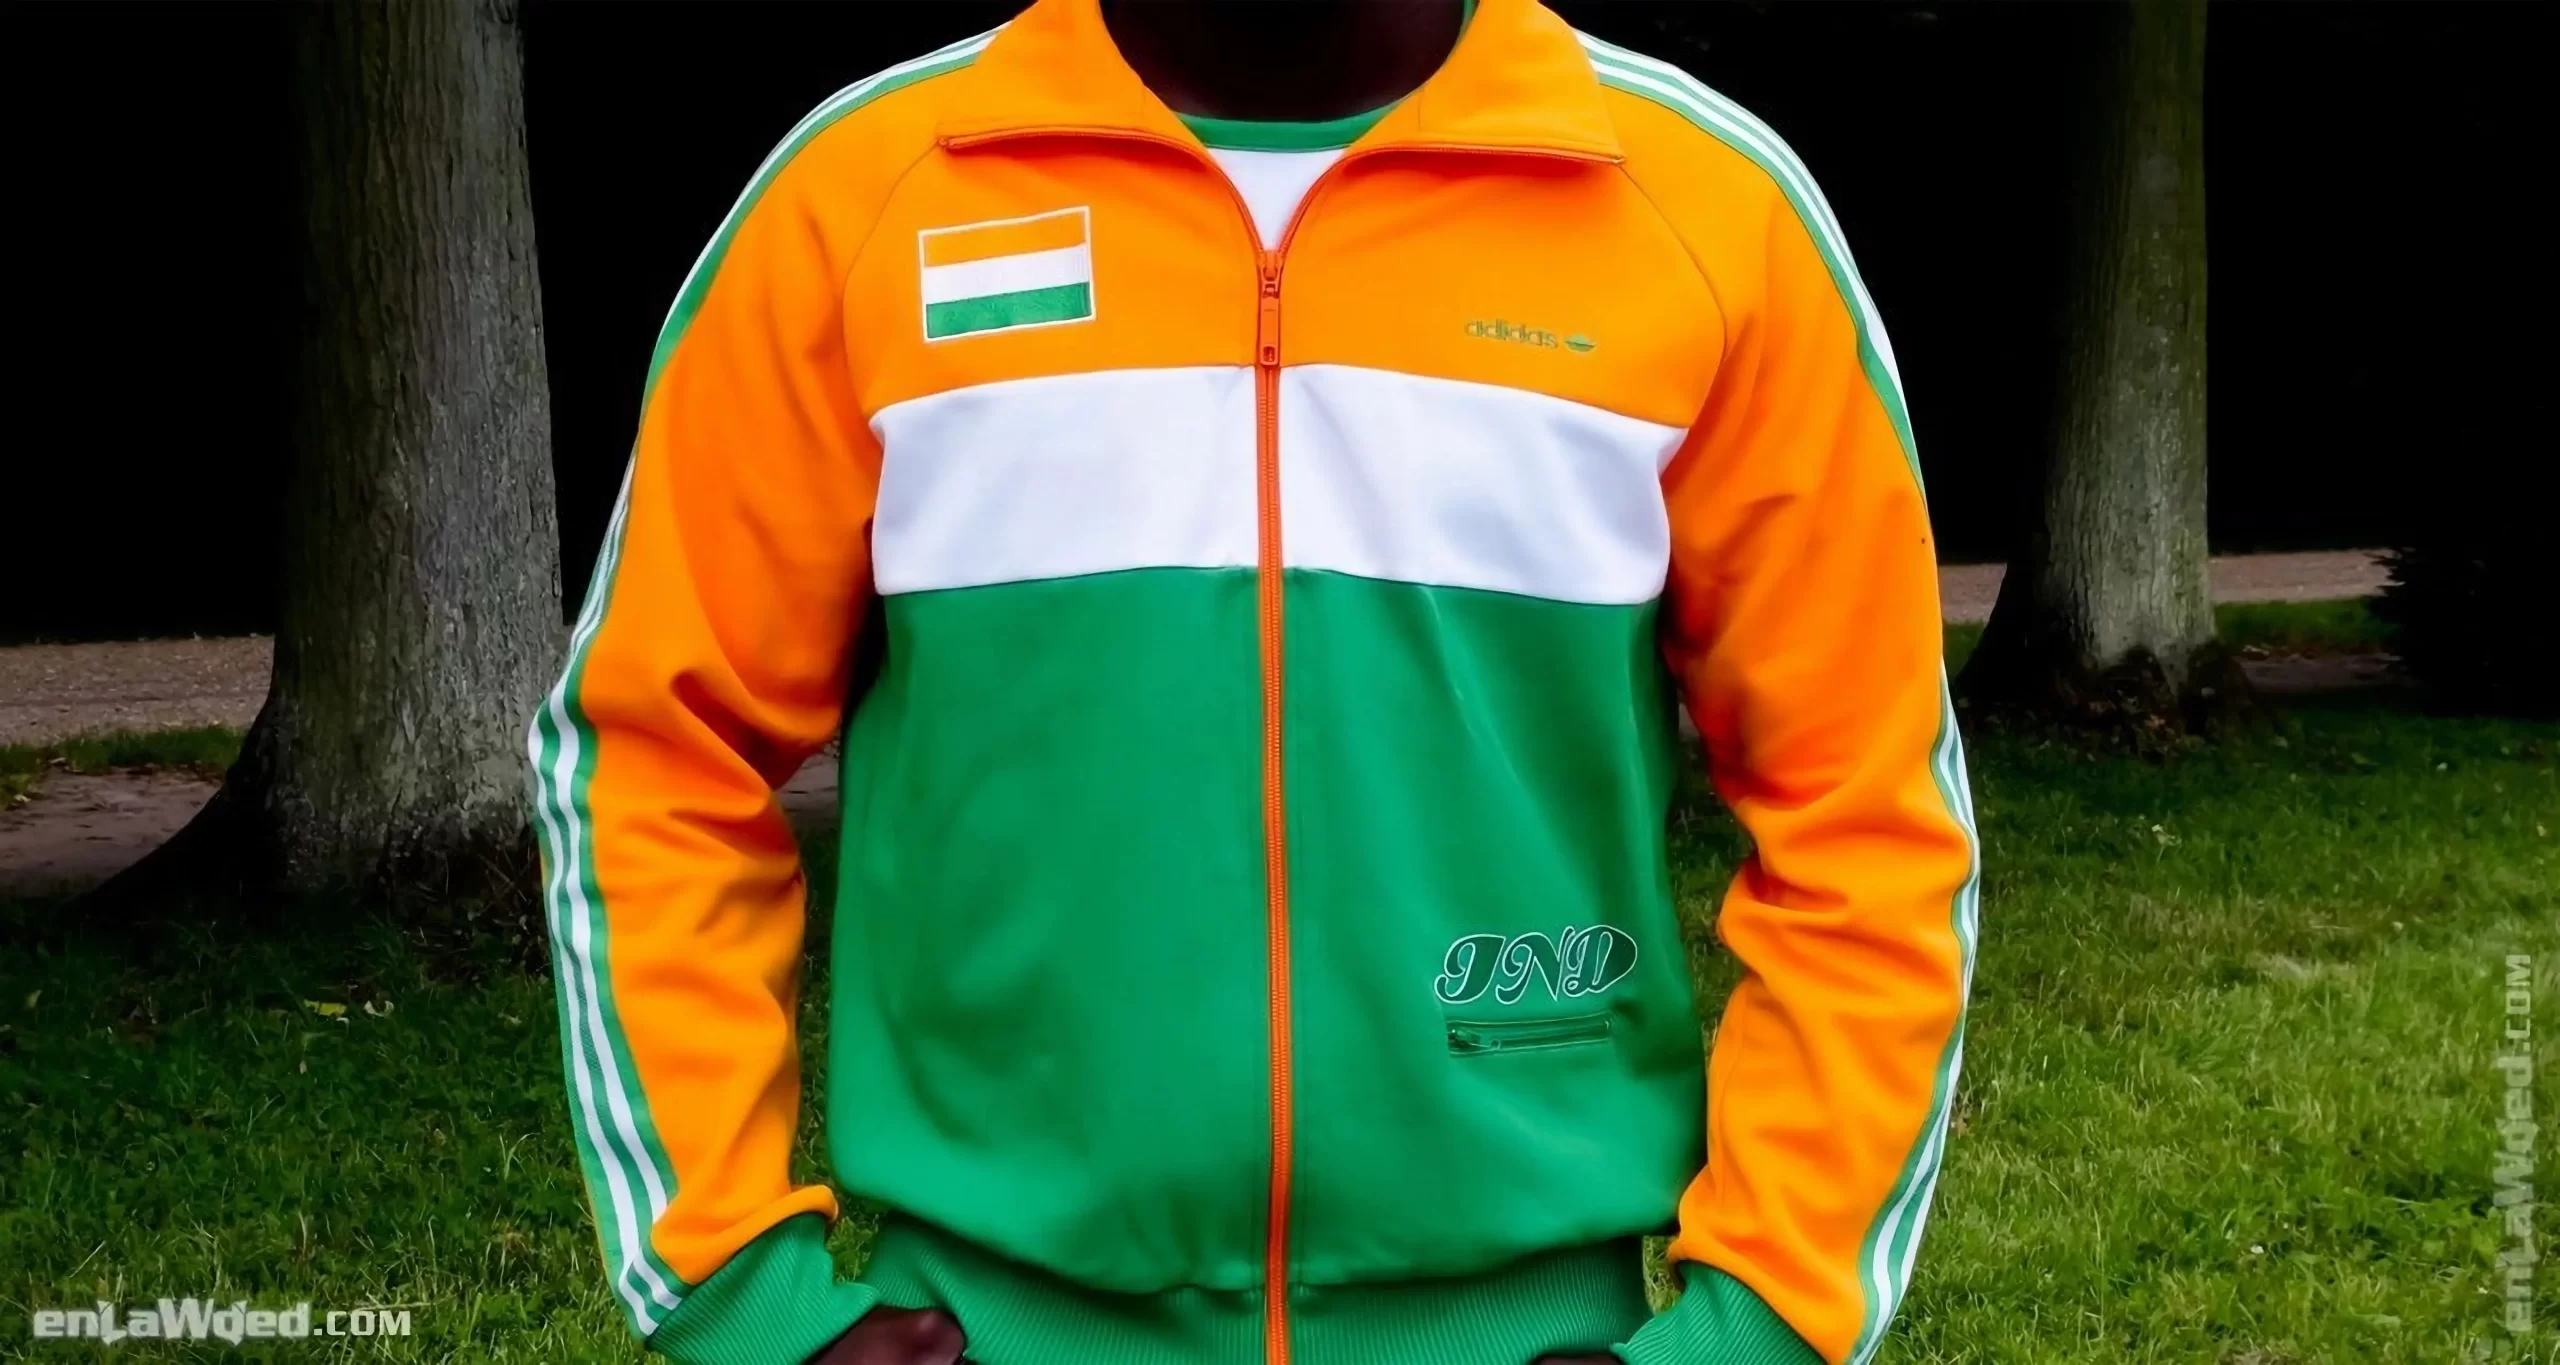 Men’s 2005 India Track Top by Adidas Originals: Jovial (EnLawded.com file #lmcfuwgo9nb1jygzv)